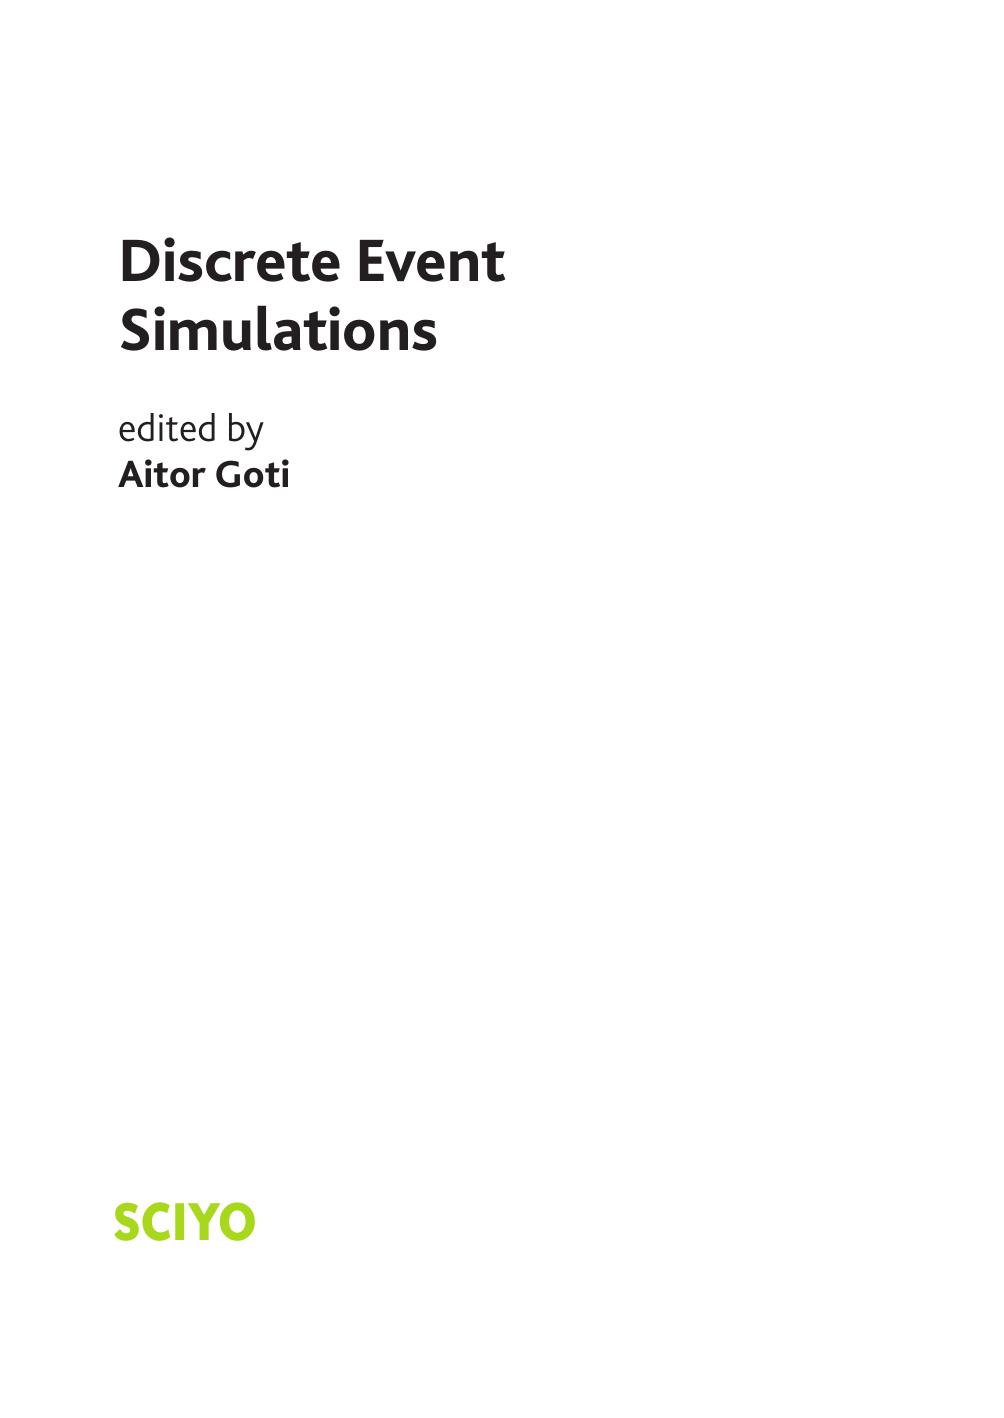 Discrete Event Simulations 2010.pdf